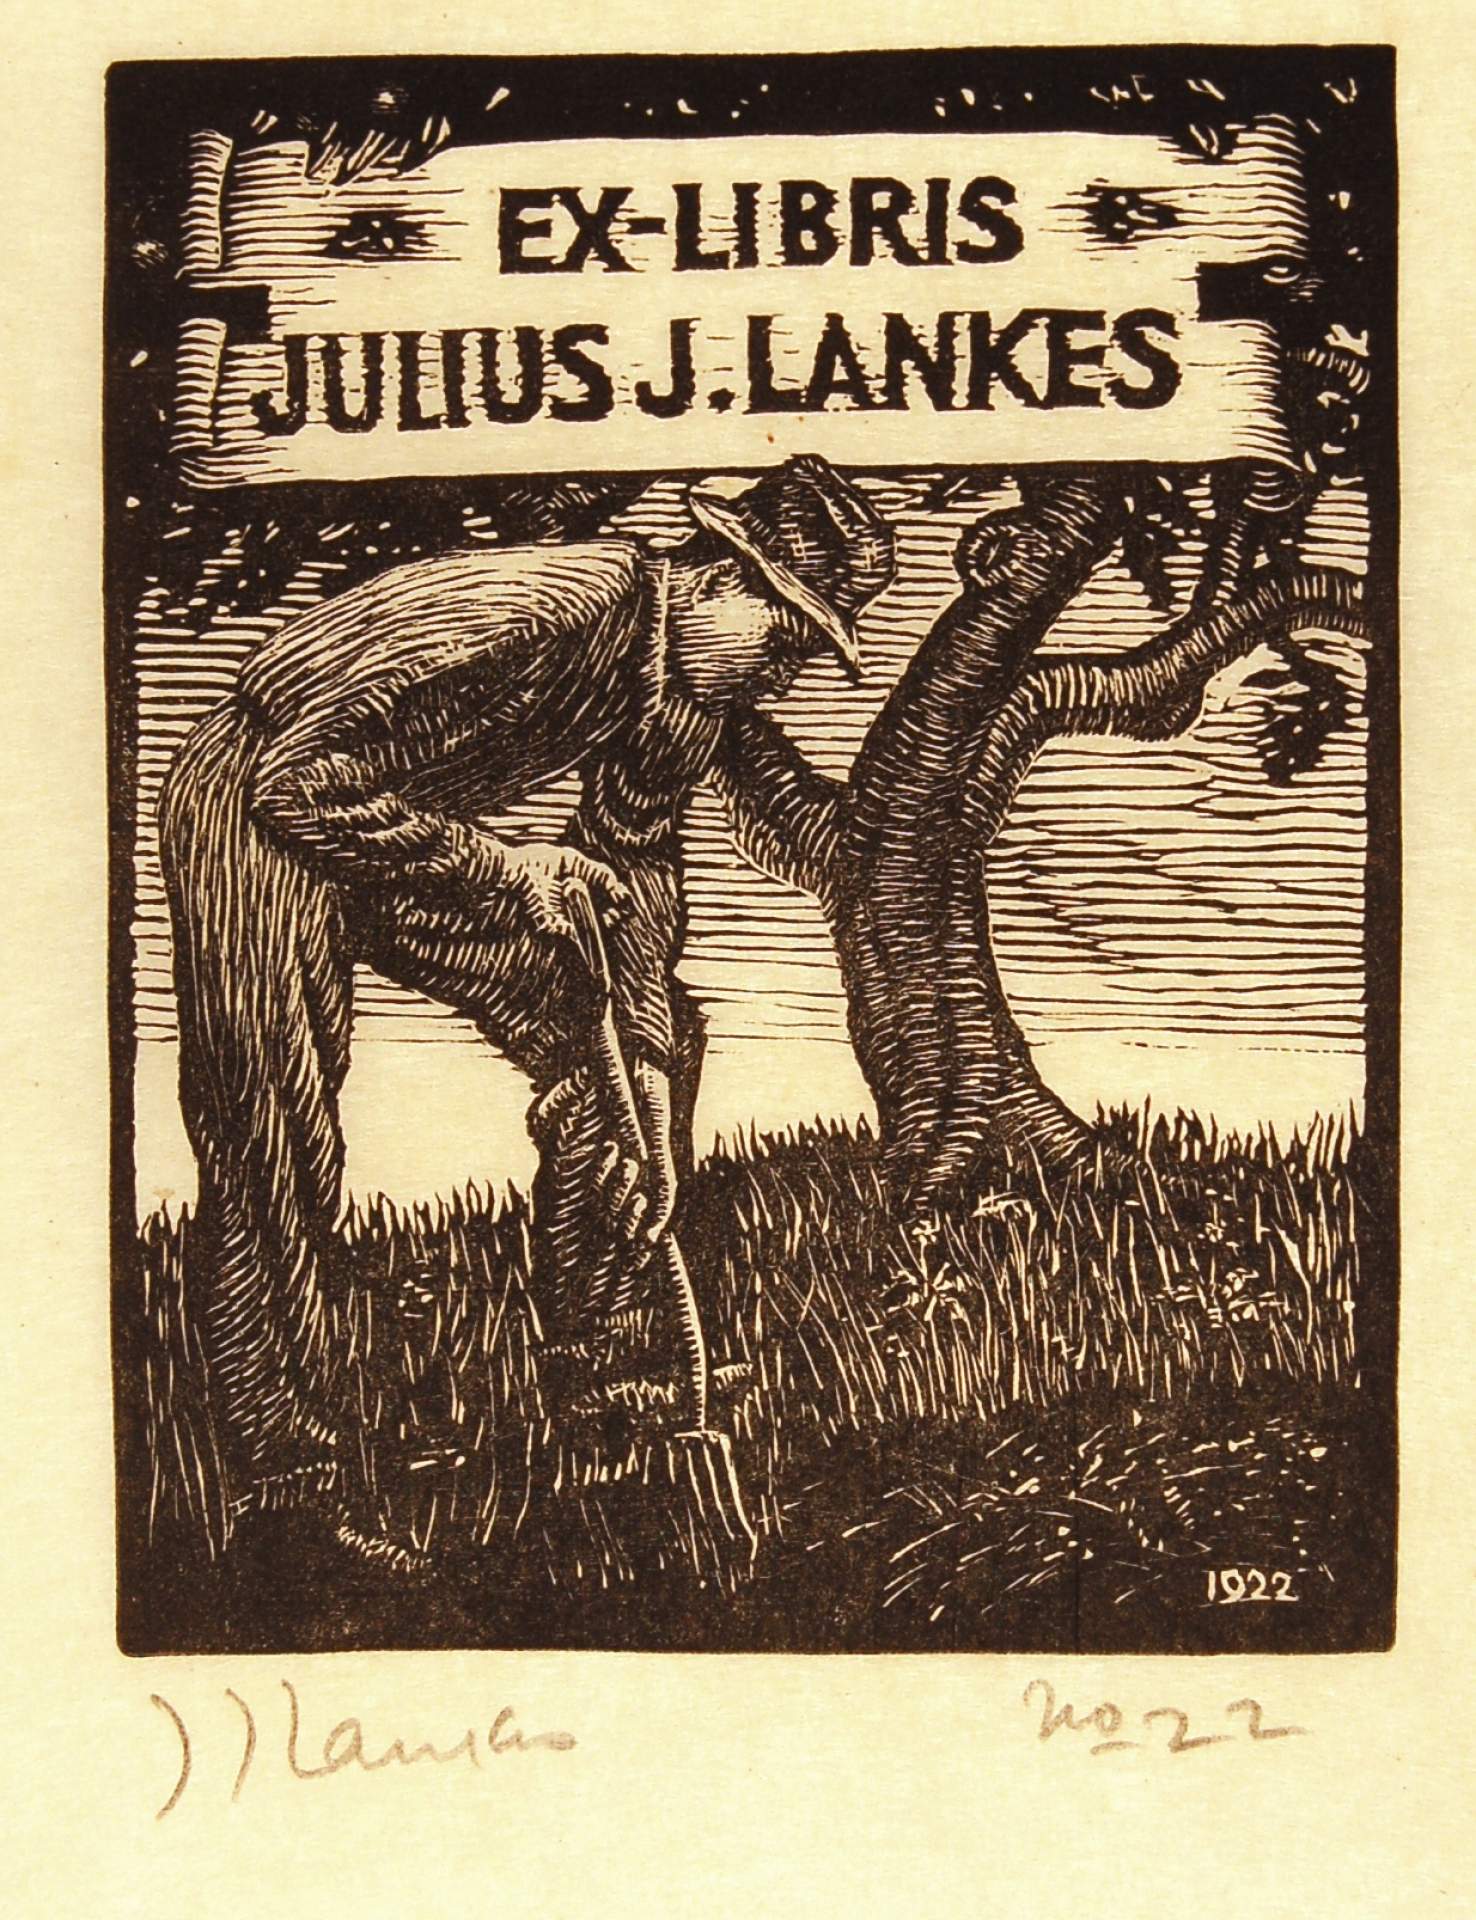 Julius J, Lankes Bookplate